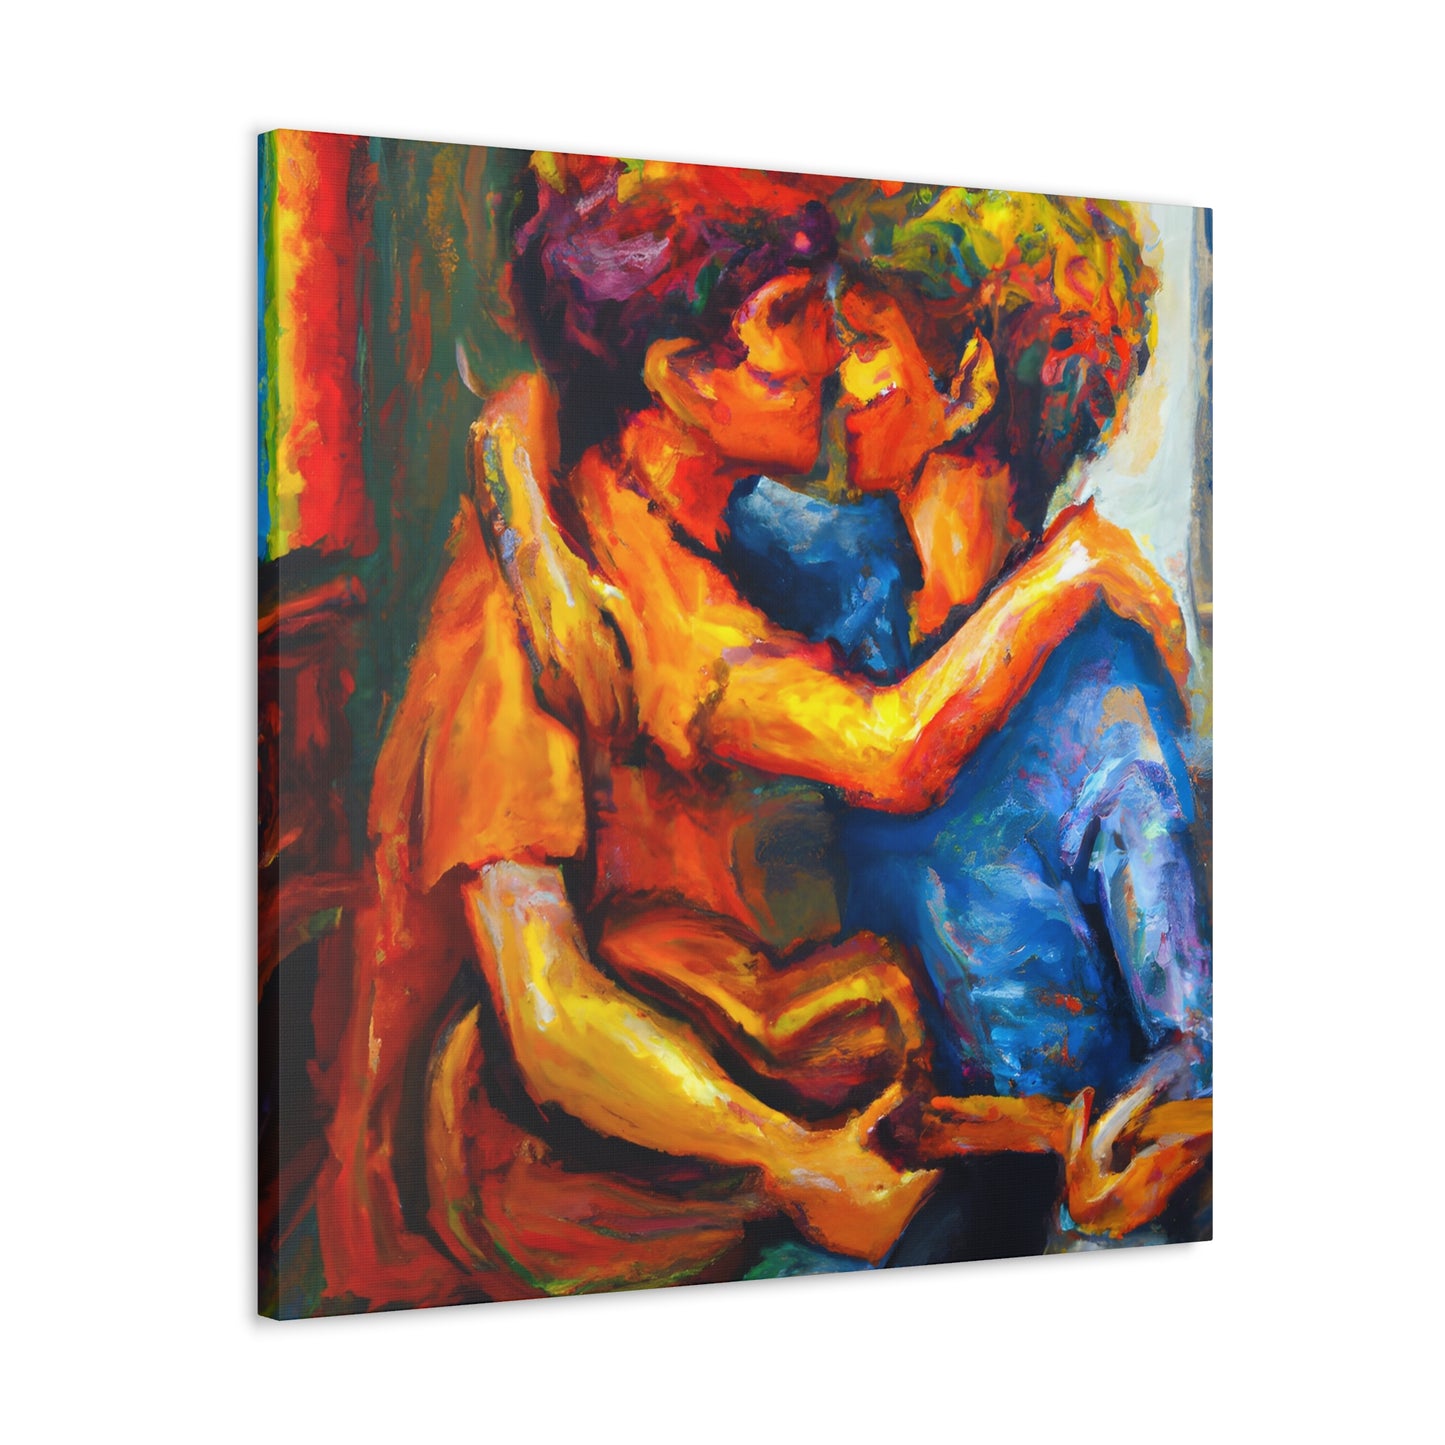 Fynn - Gay Love Canvas Art